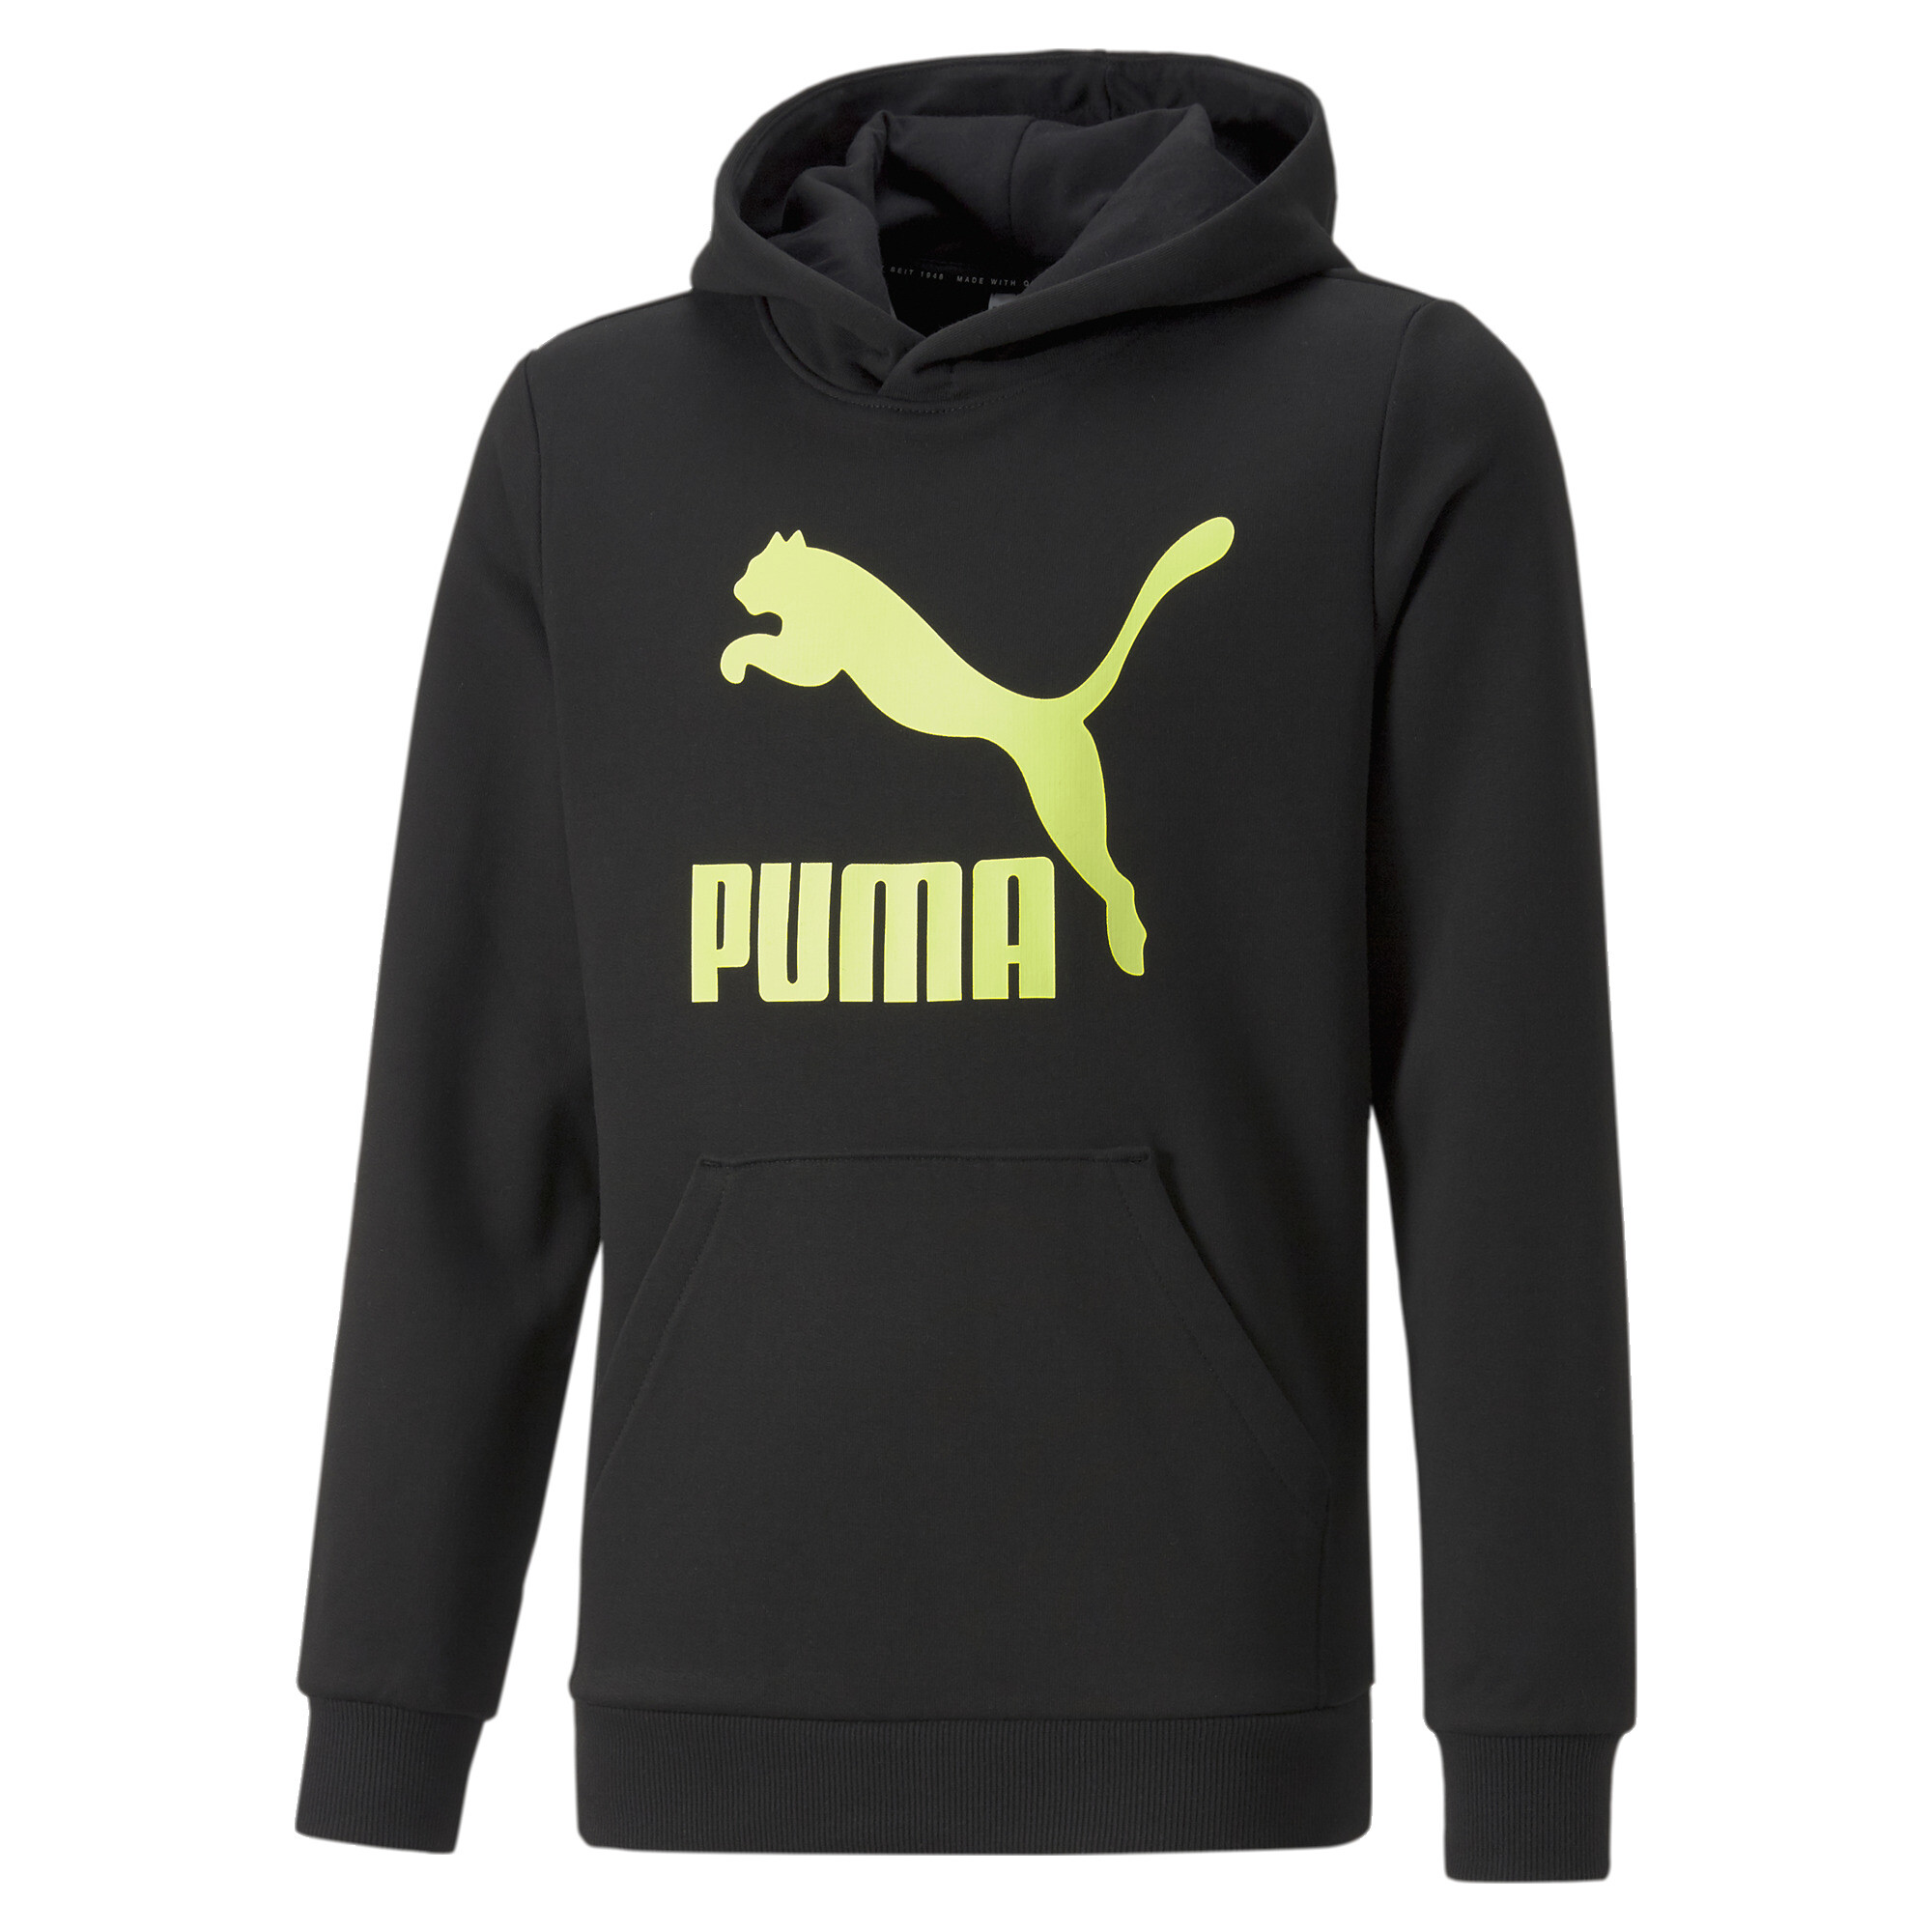 PUMA Classics Logo Hoodie In Black, Size 7-8 Youth